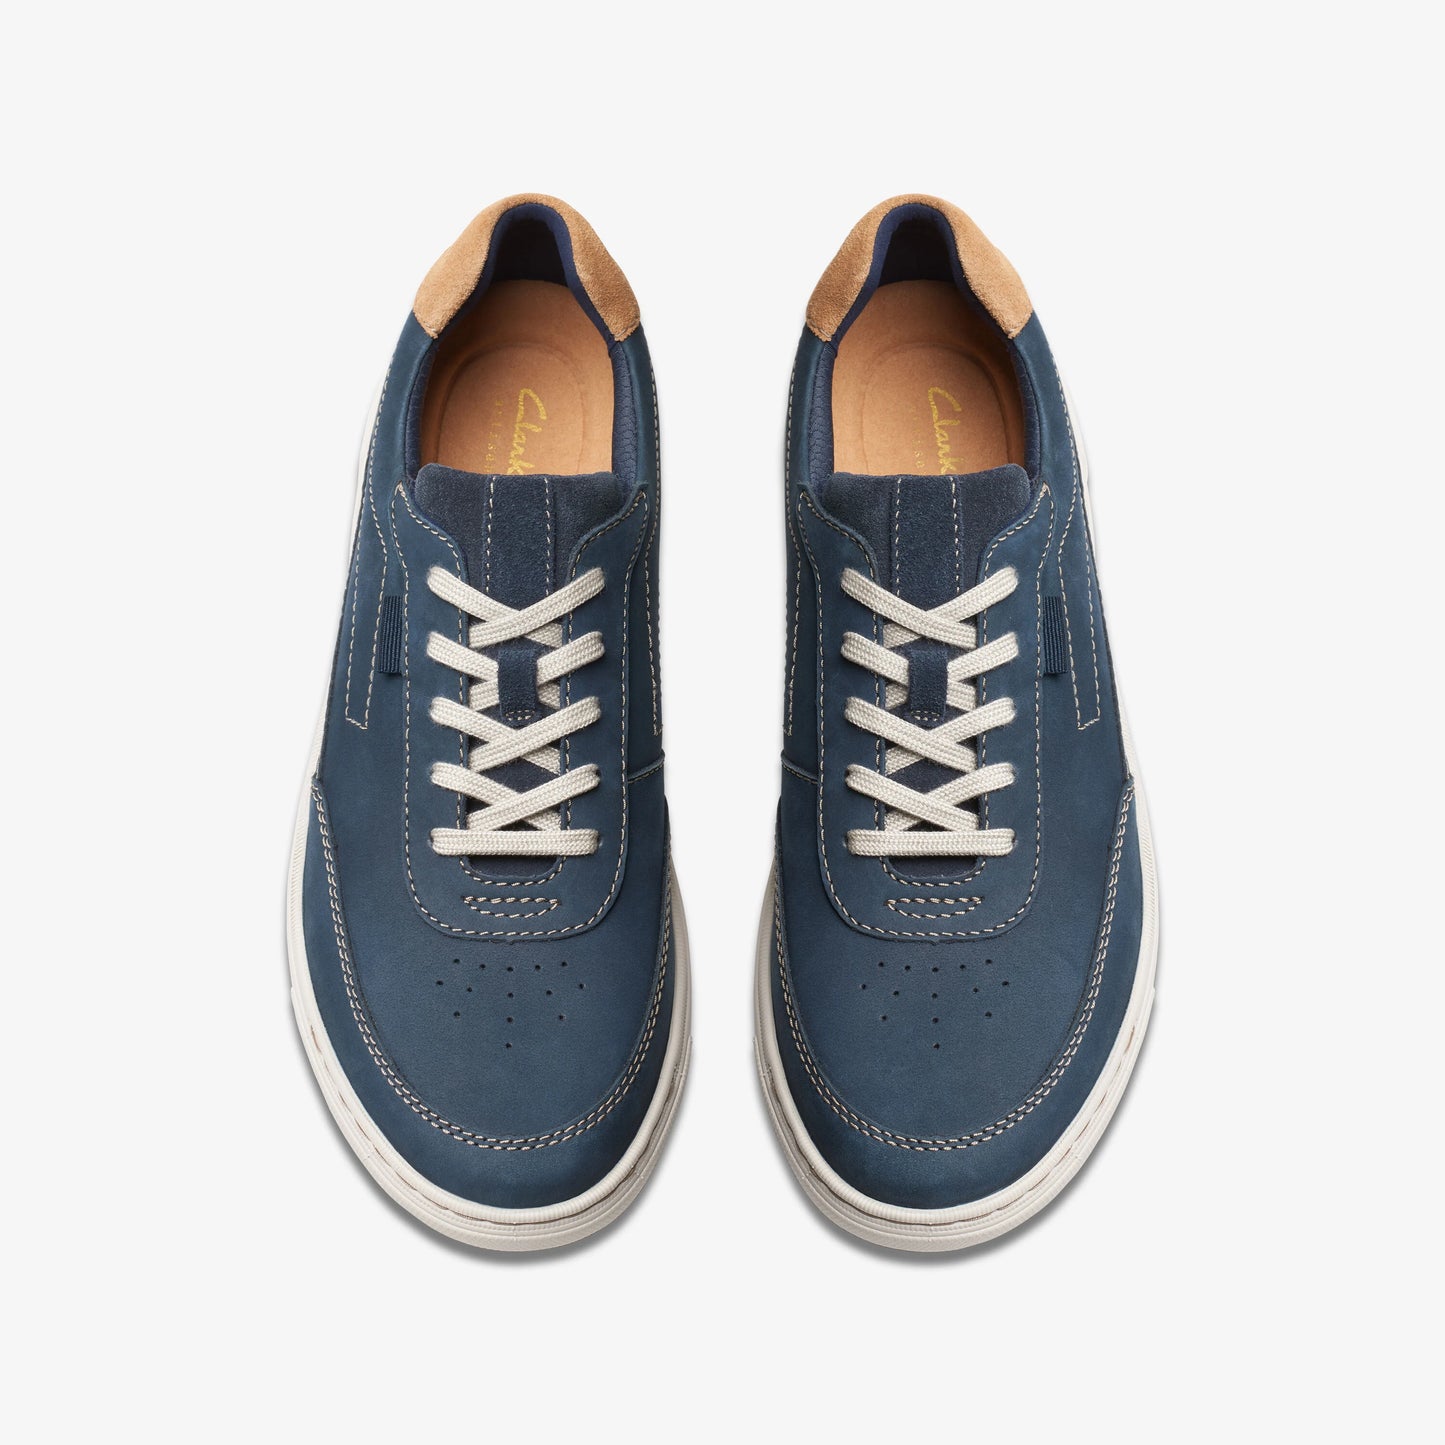 CLARKS | 男士休闲鞋 | MAPSTONE TRAIL NAVY NUBUCK | 蓝色的